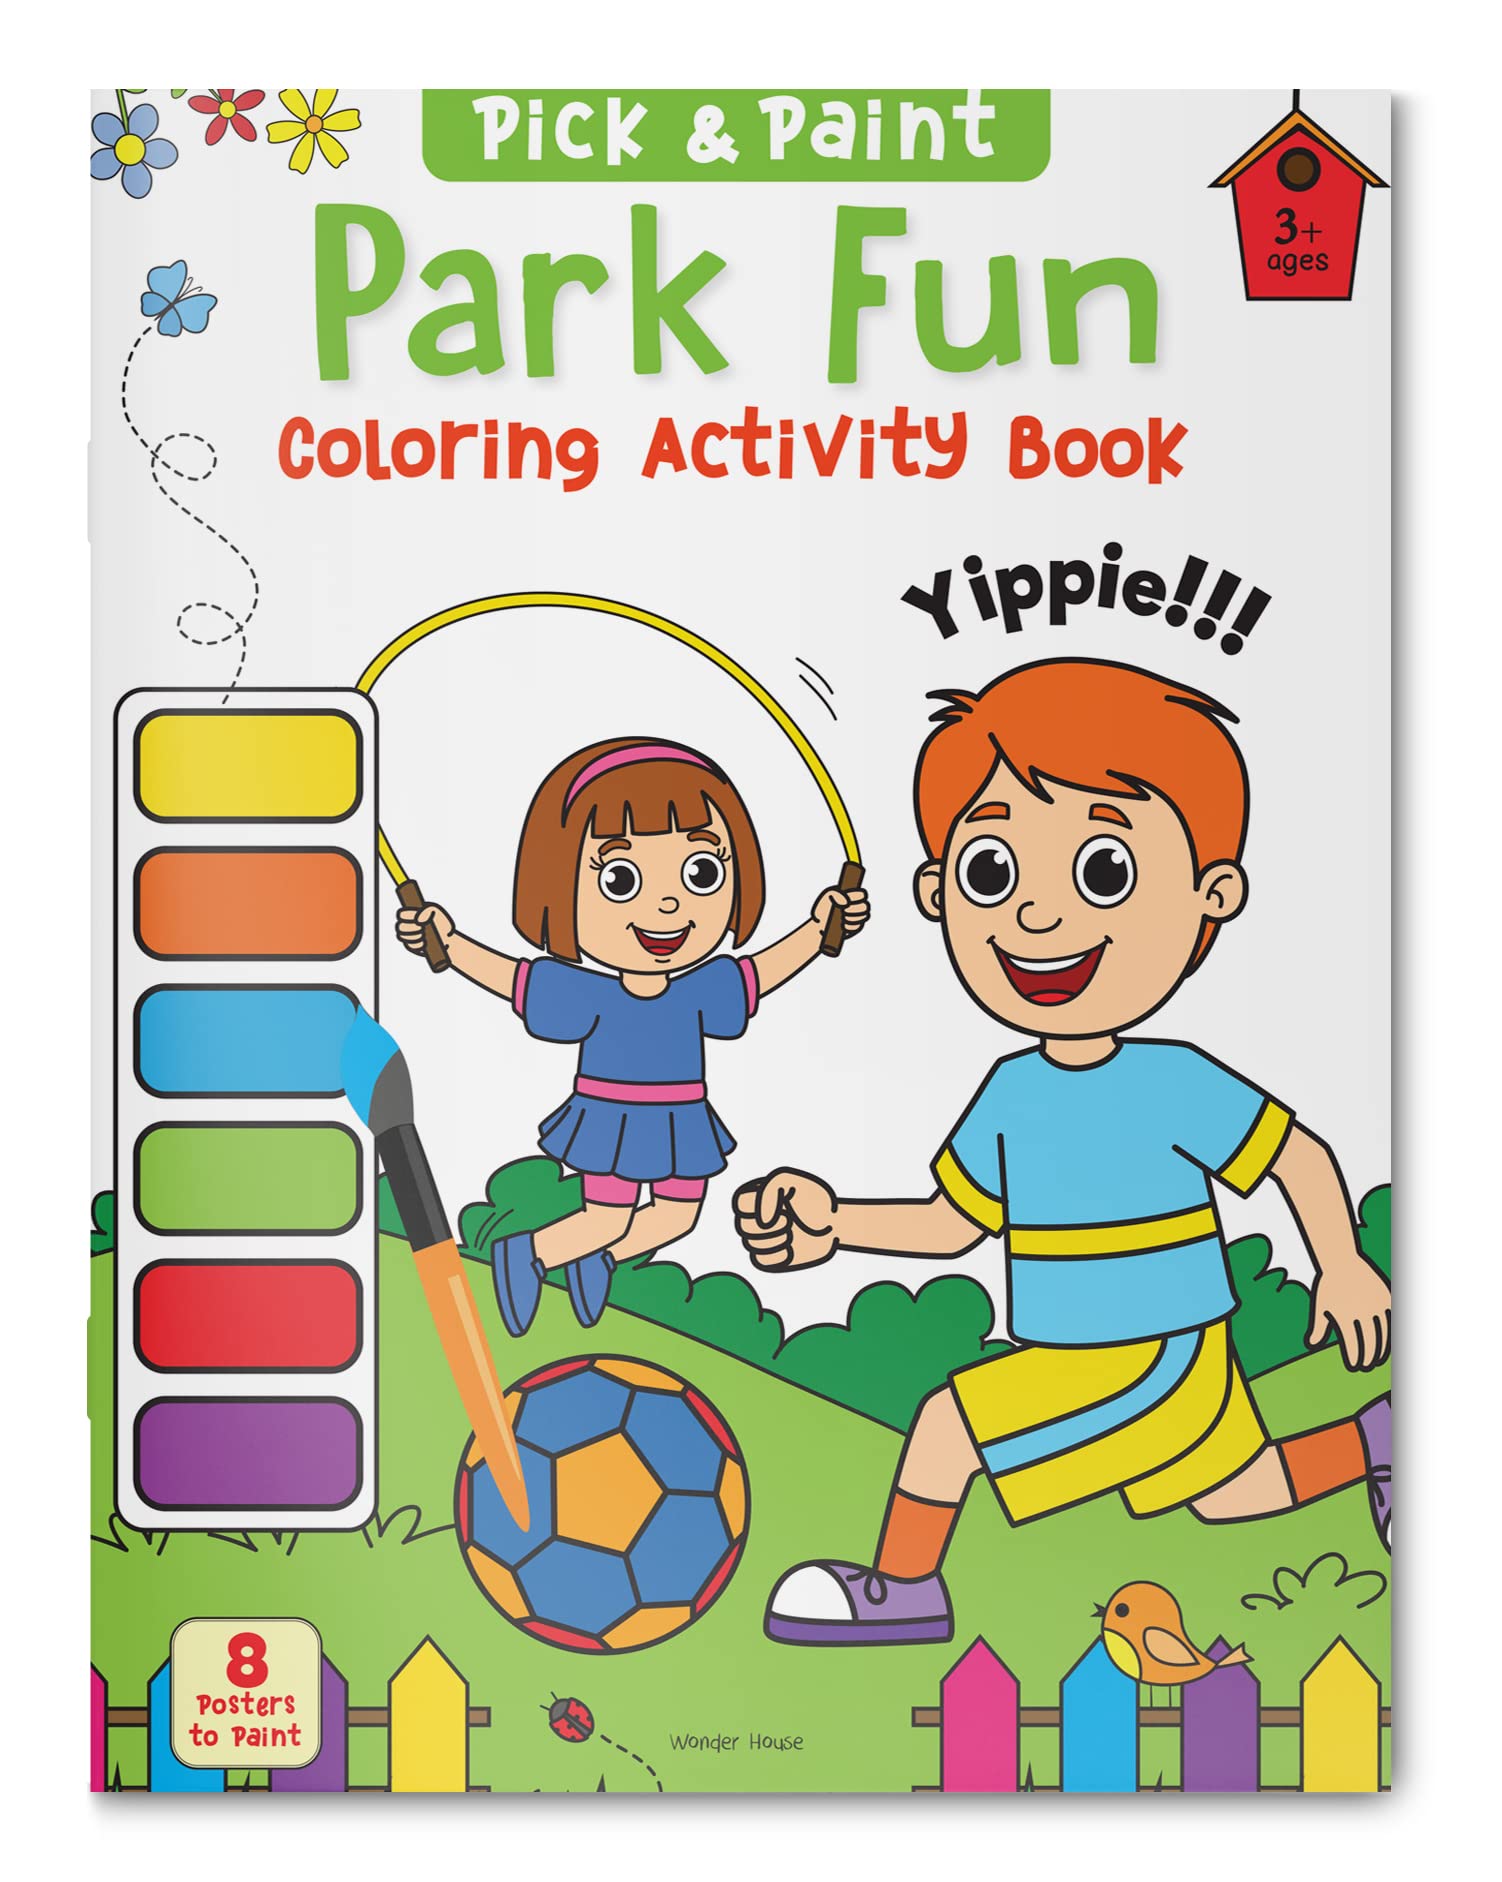 Park fun: Pick & Paint Coloring Activity Book For Kids